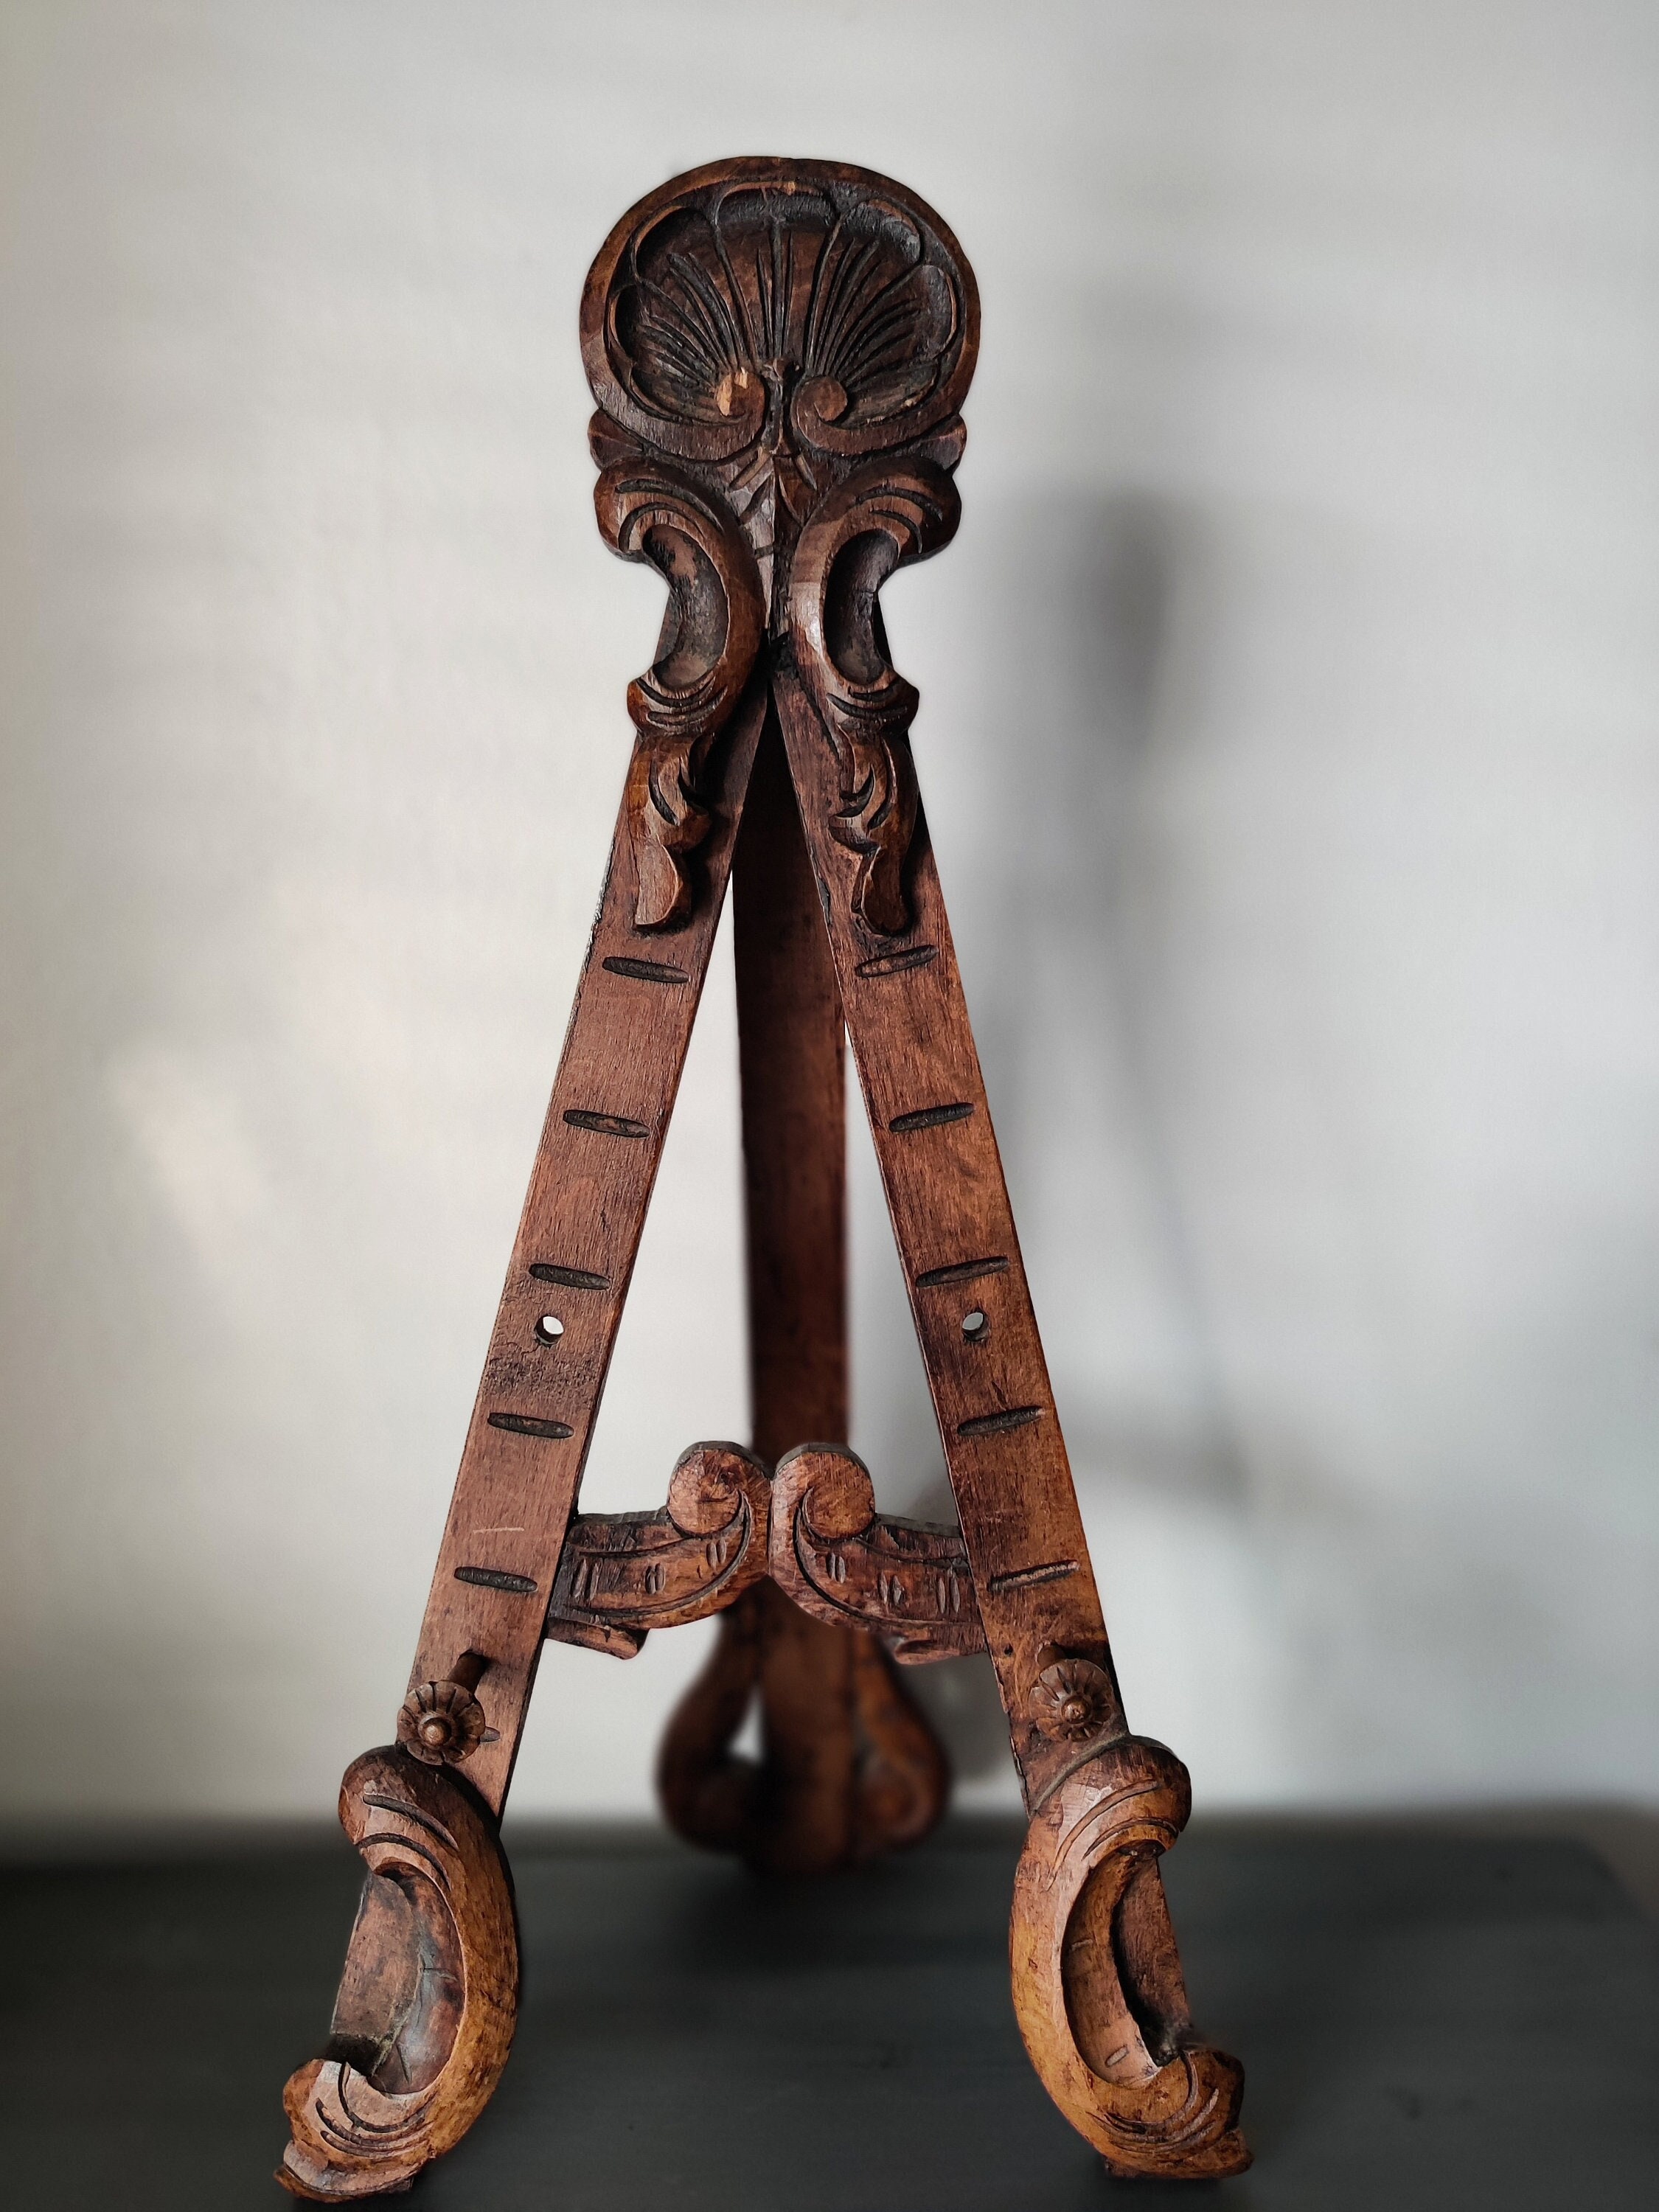 XL Baroque Carved Wood Laurel Crown FLOOR EASEL Art Display Stand 87 X 27 